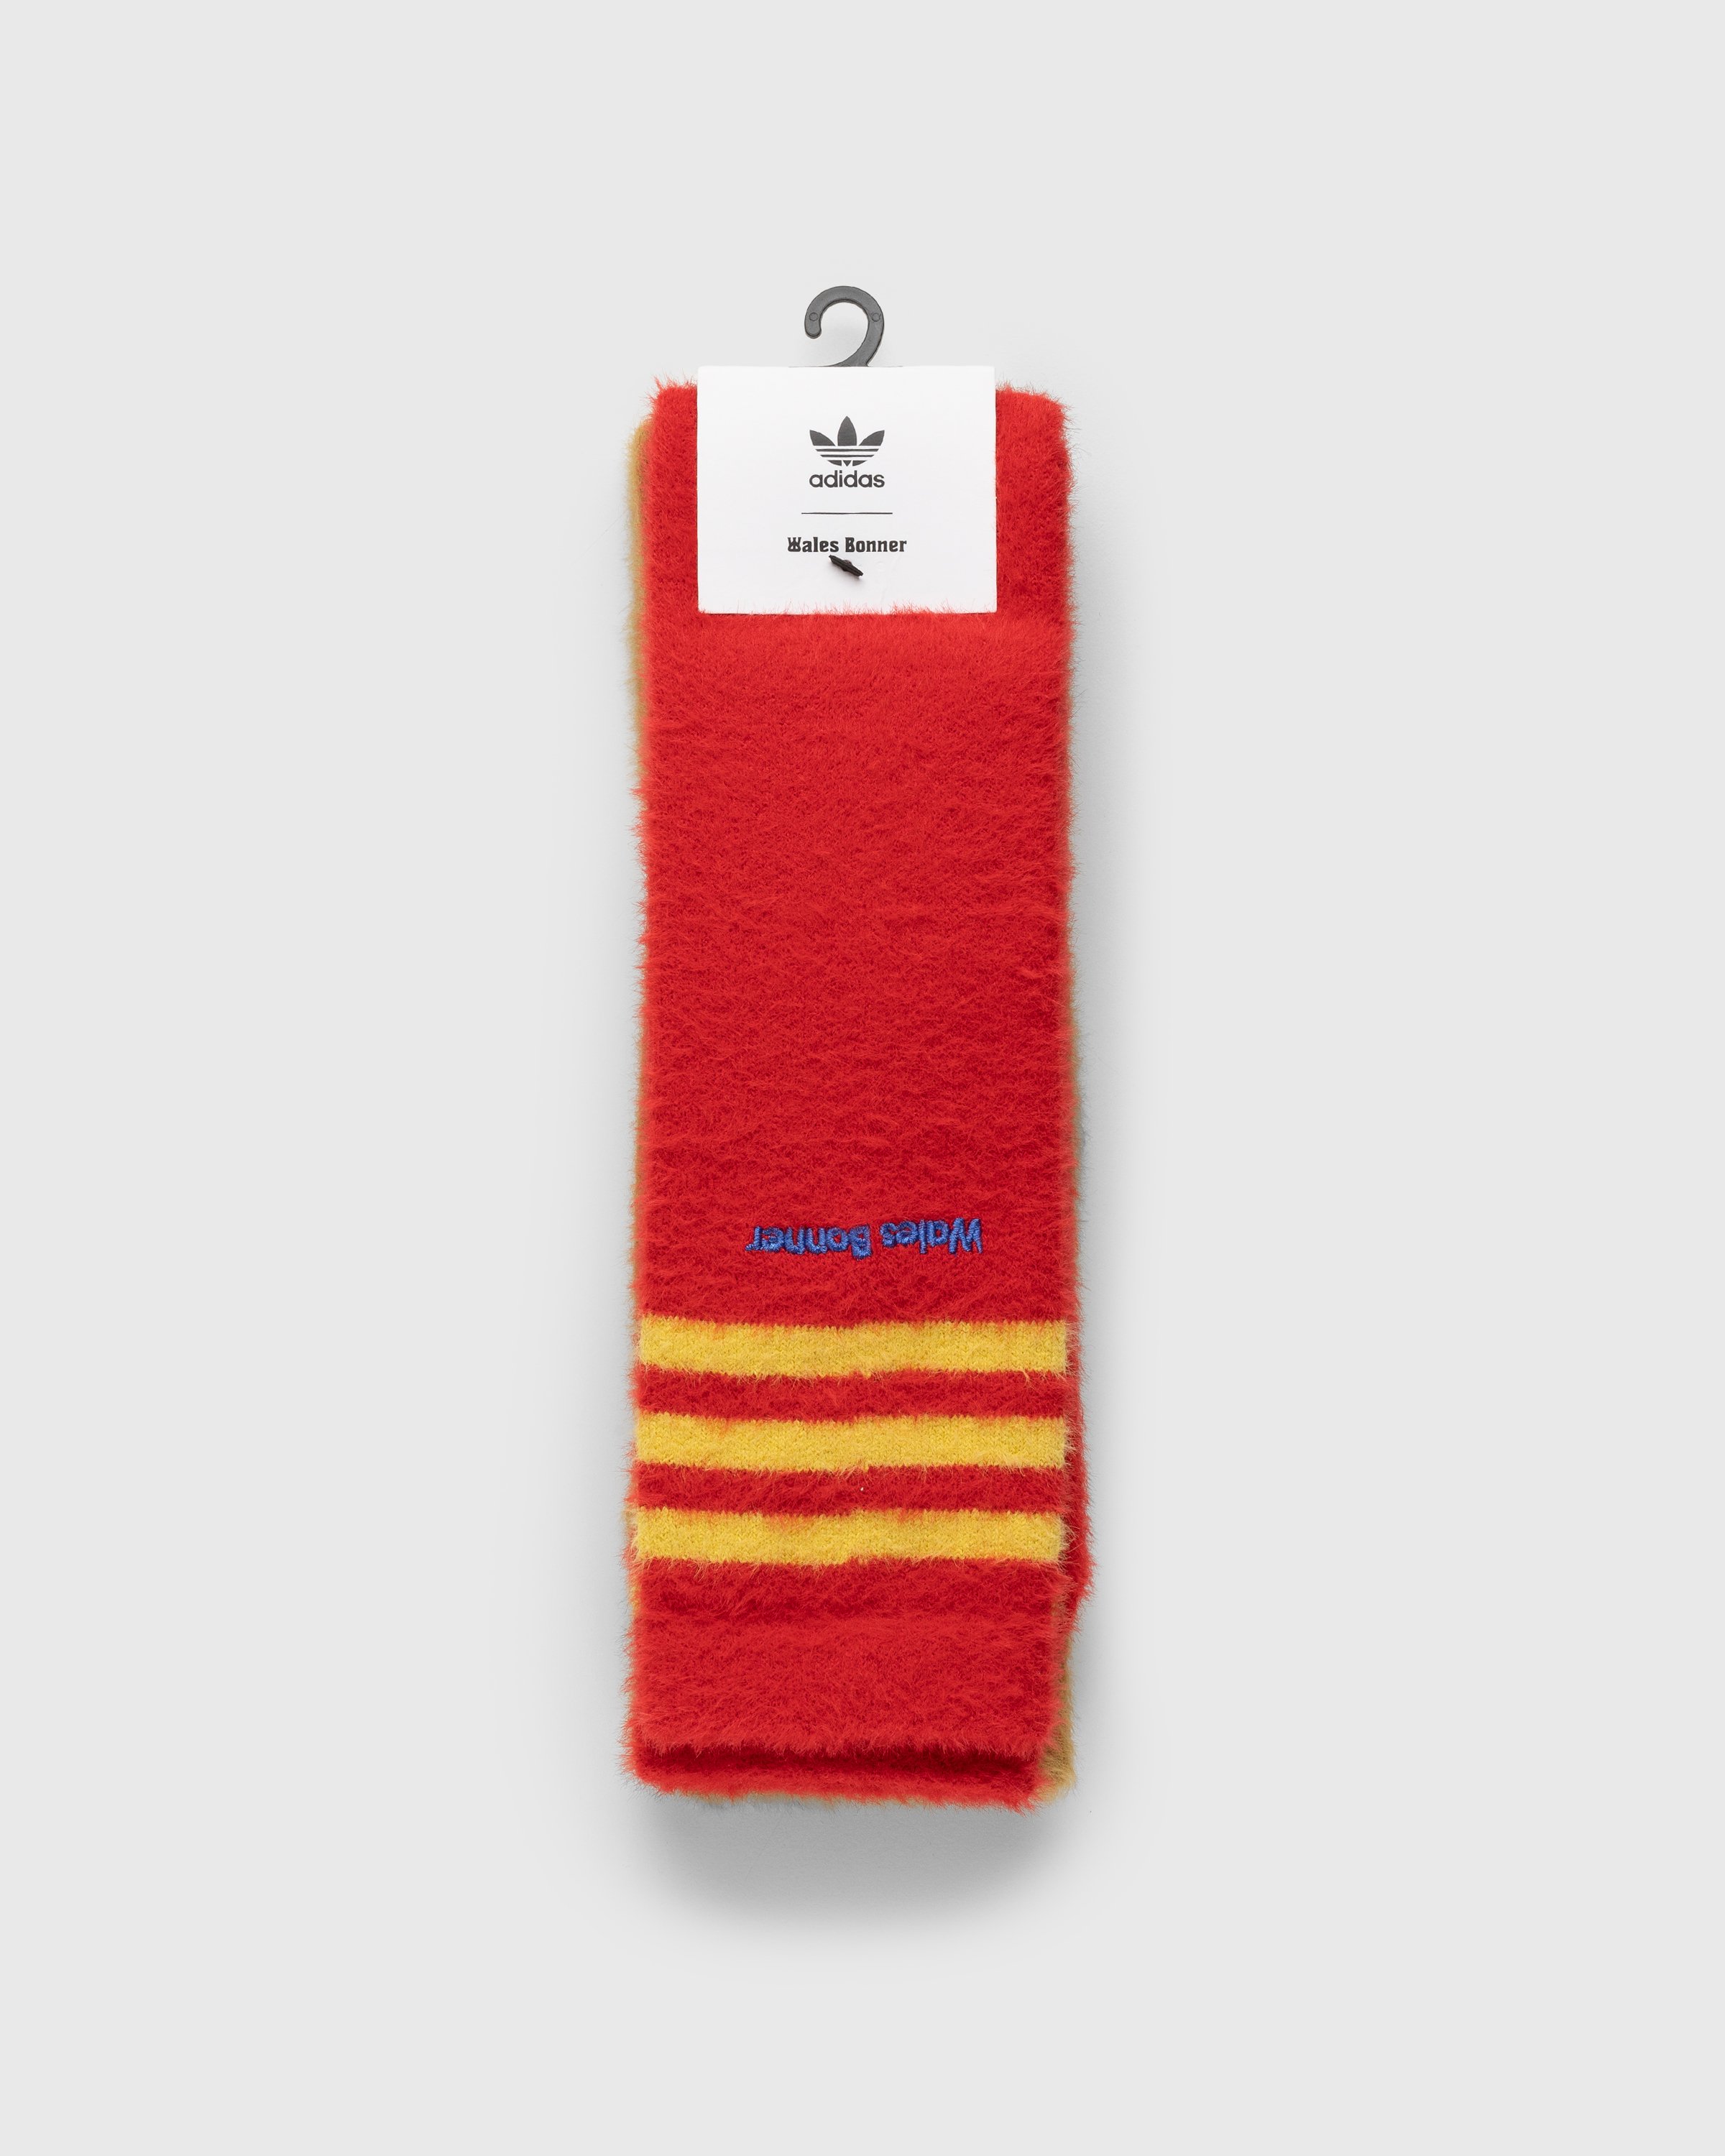 Adidas x Wales Bonner - WB Socks Scarlet/Mesa - Accessories - Yellow - Image 2